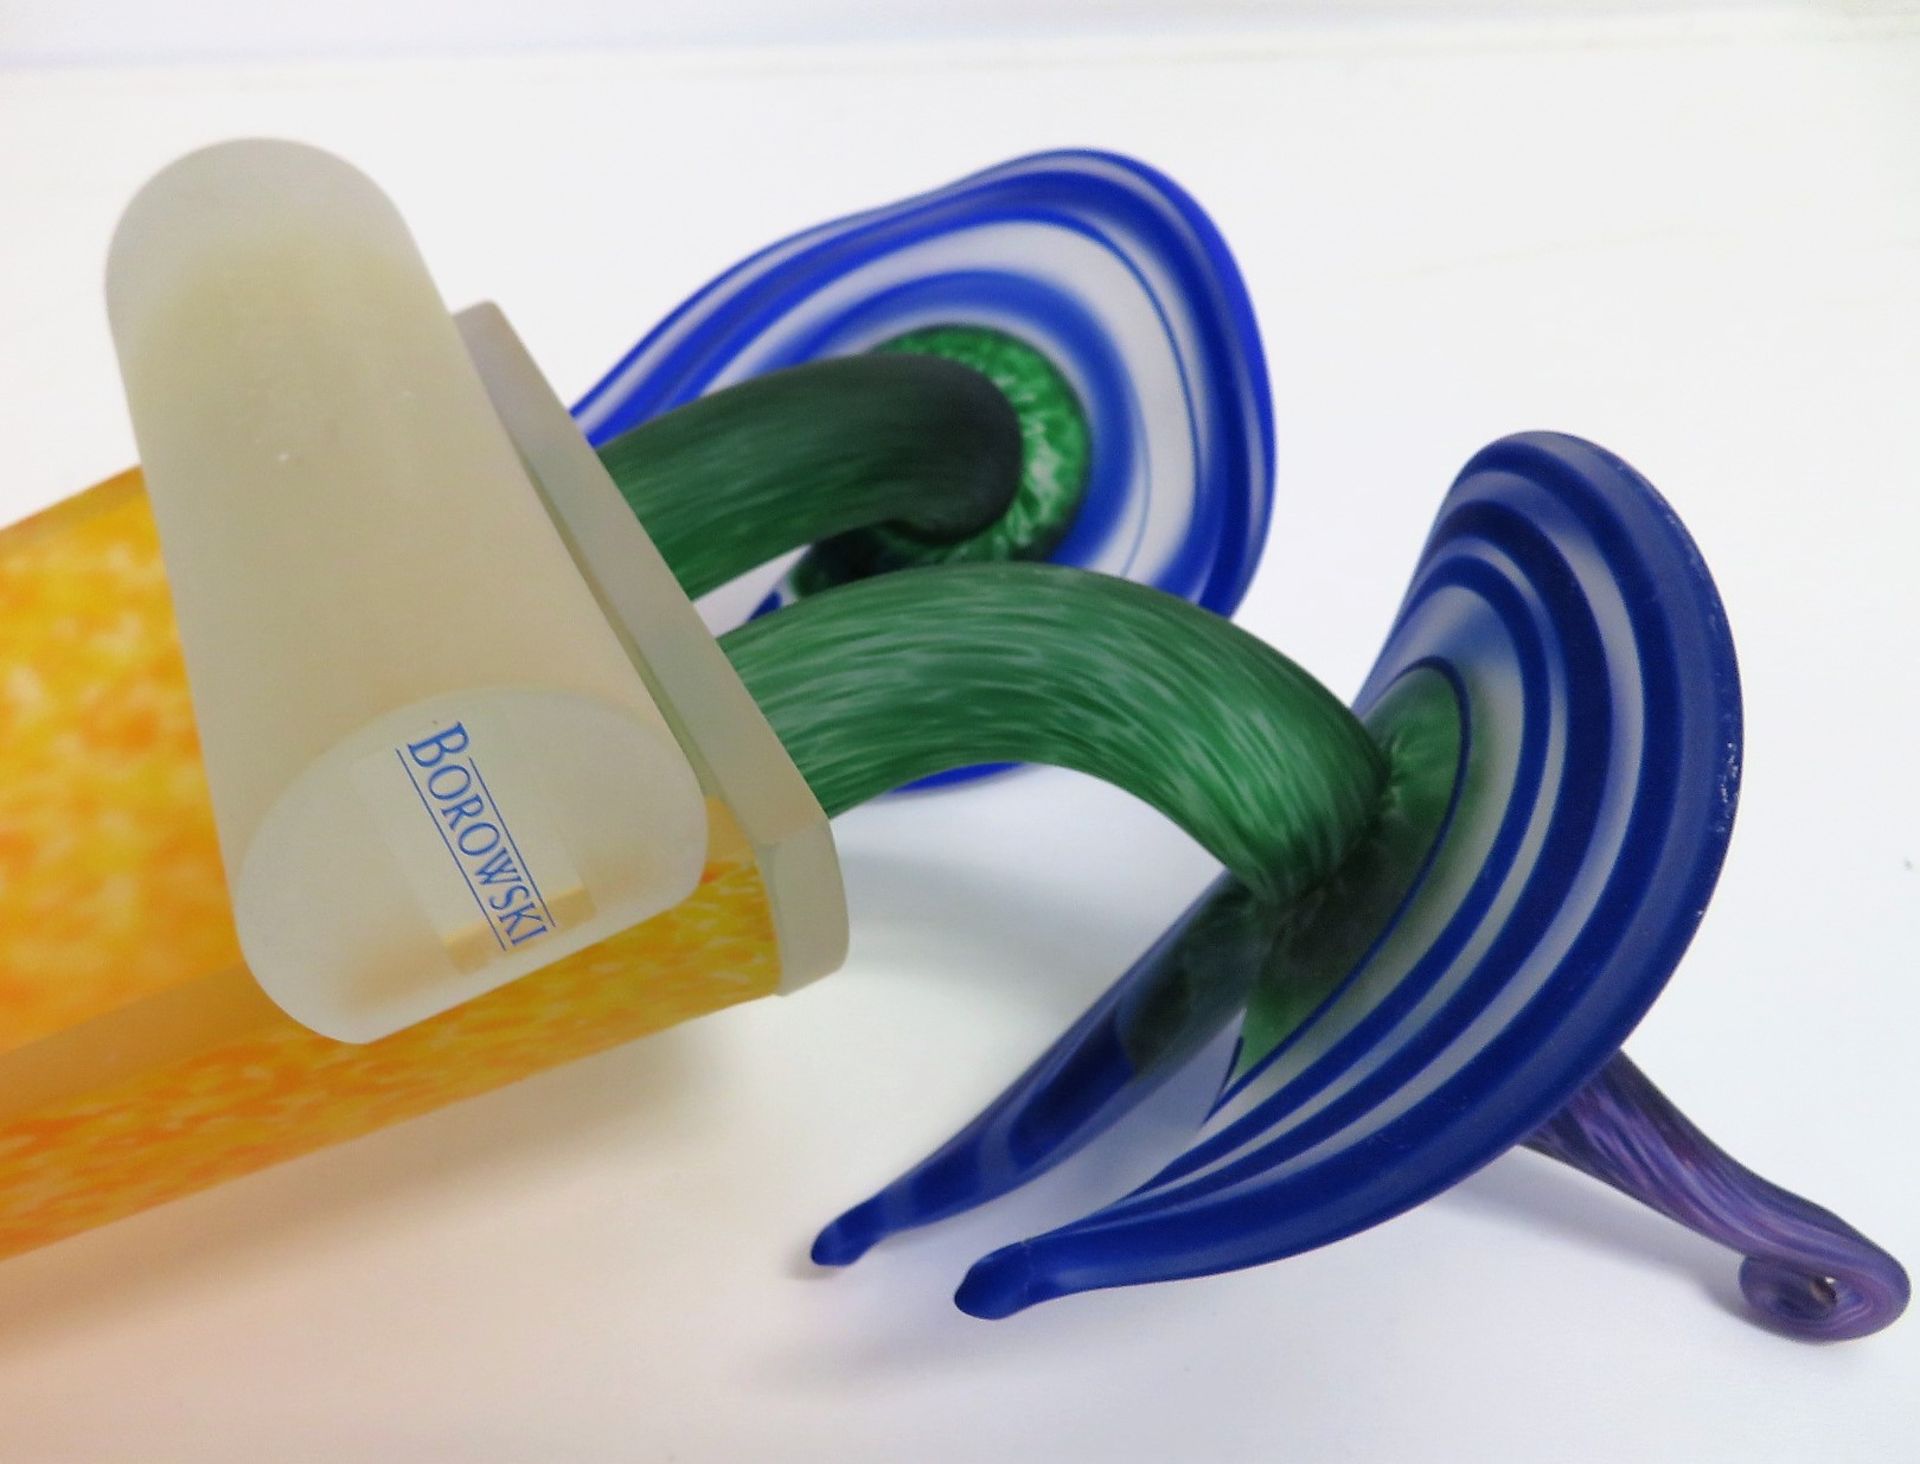 Designer Wandlampe, Borowski Glasstudio Königswinter, farbiges Glas, einflammig, Unikat, sign., Ori - Bild 2 aus 2